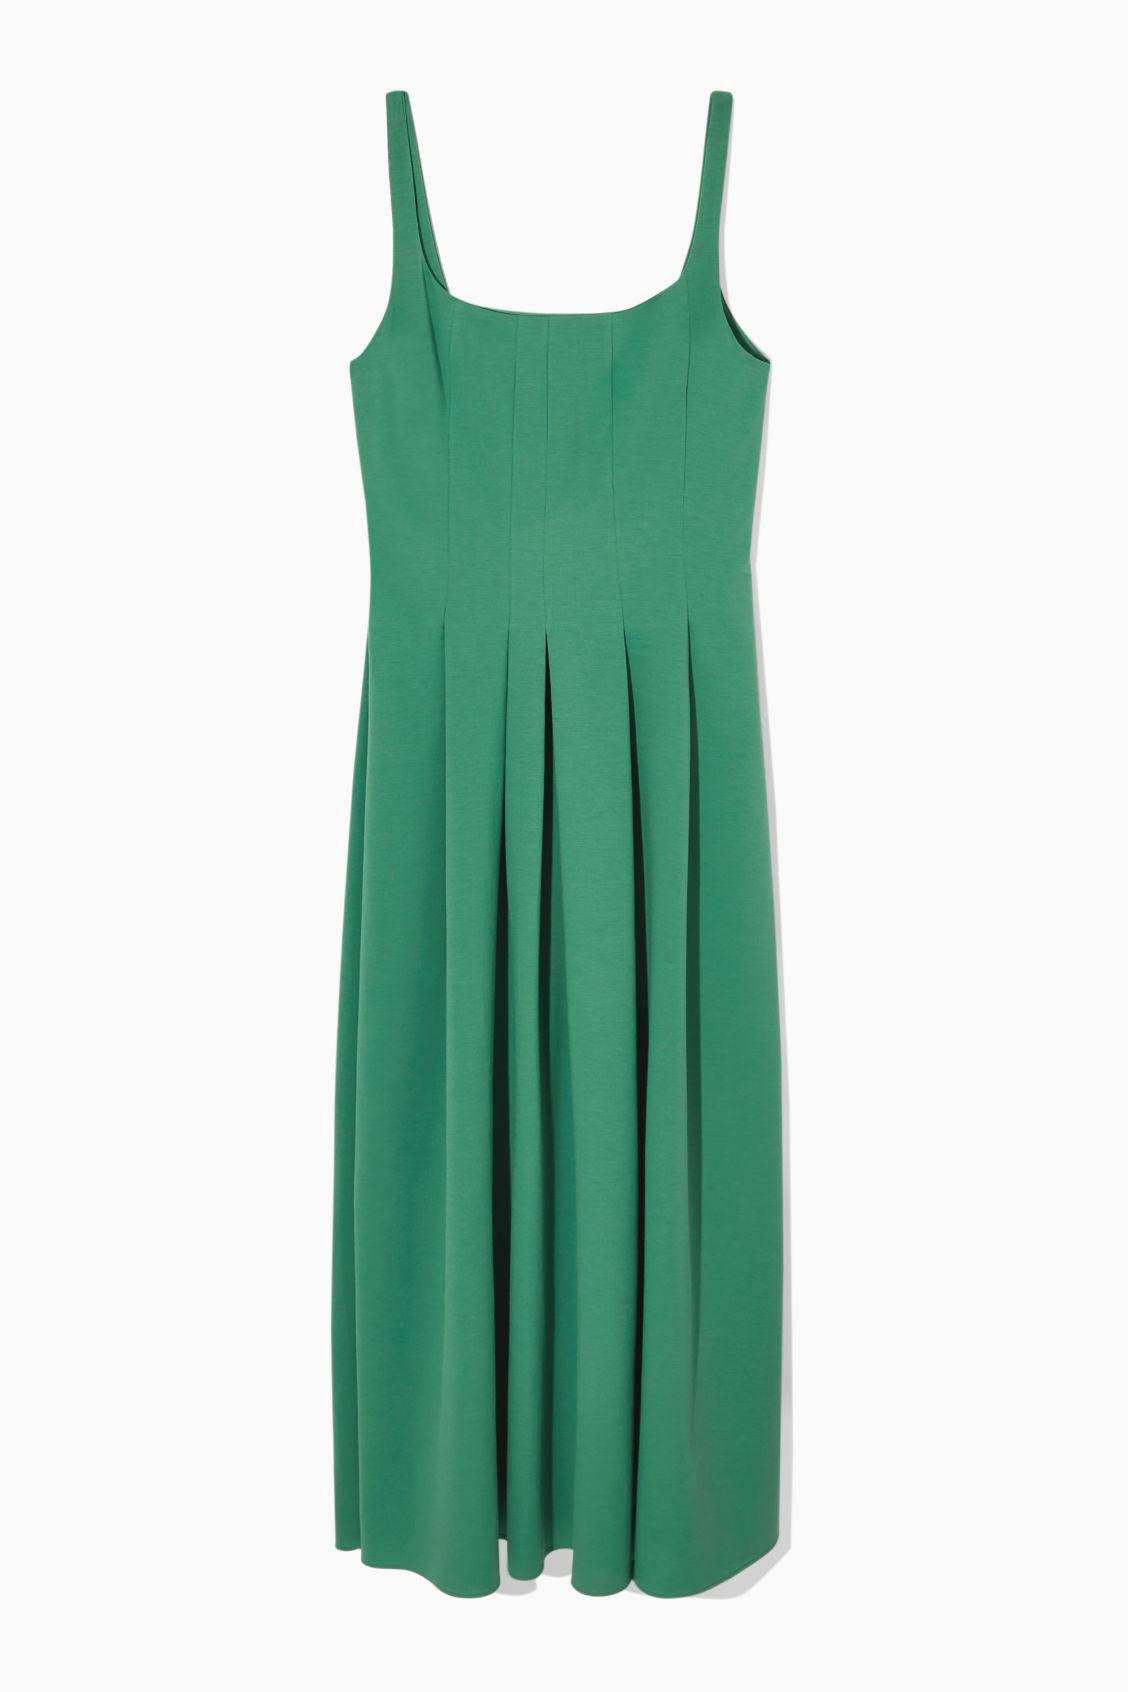 COS Pleated Jersey Midi Dress in Green | Lyst